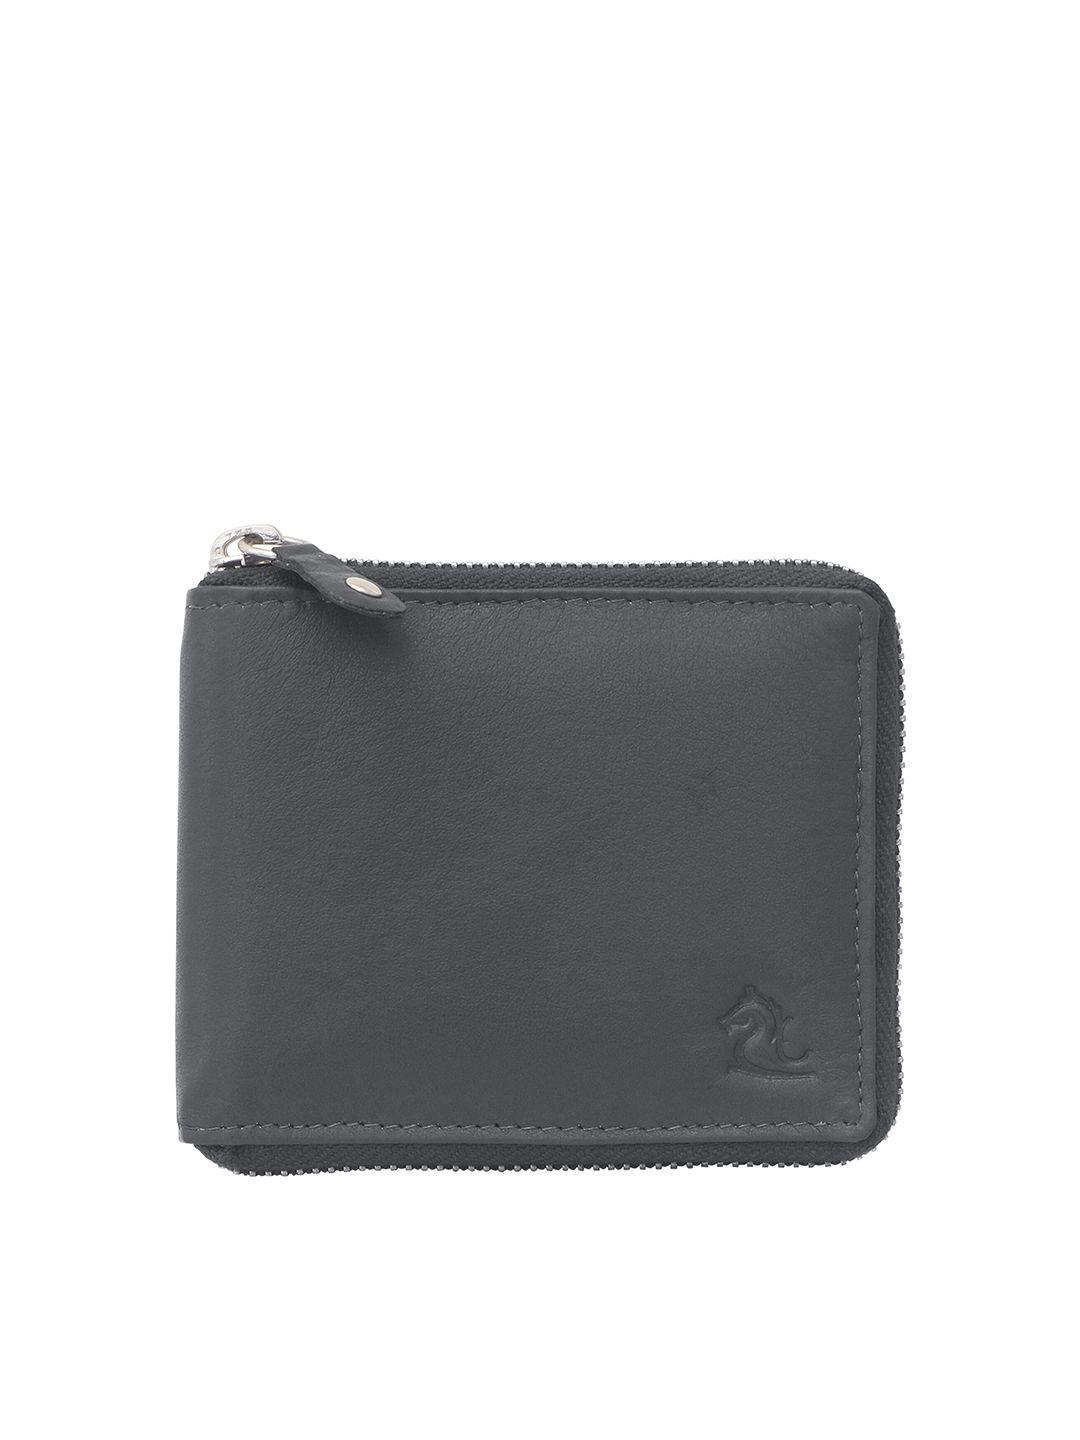 kara men leather zip around wallet